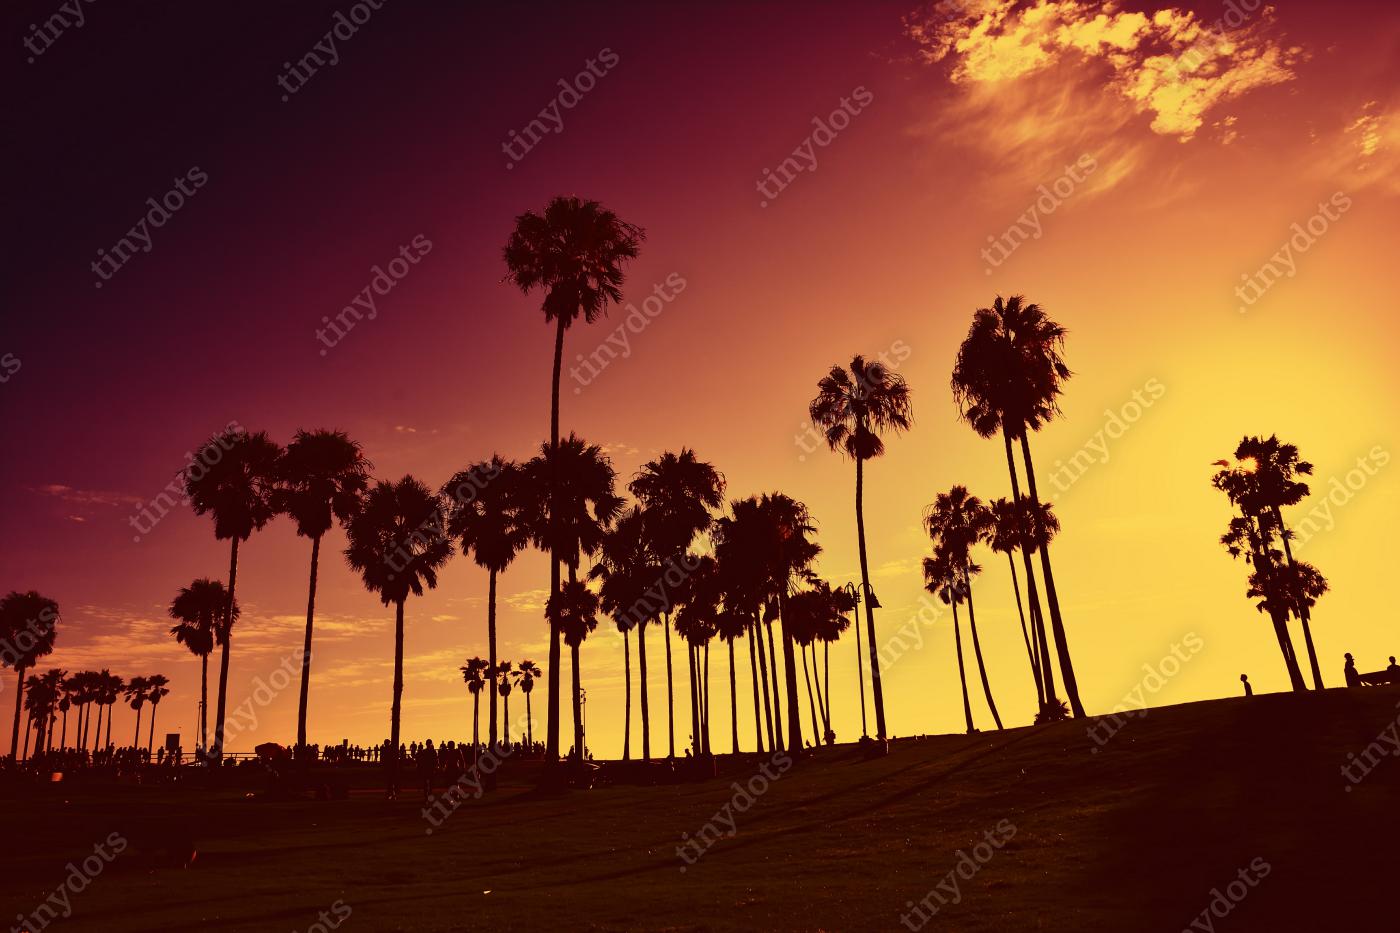 Afbeelding op acrylglas Zonsondergang bij Venice Beach, Californië, VS.